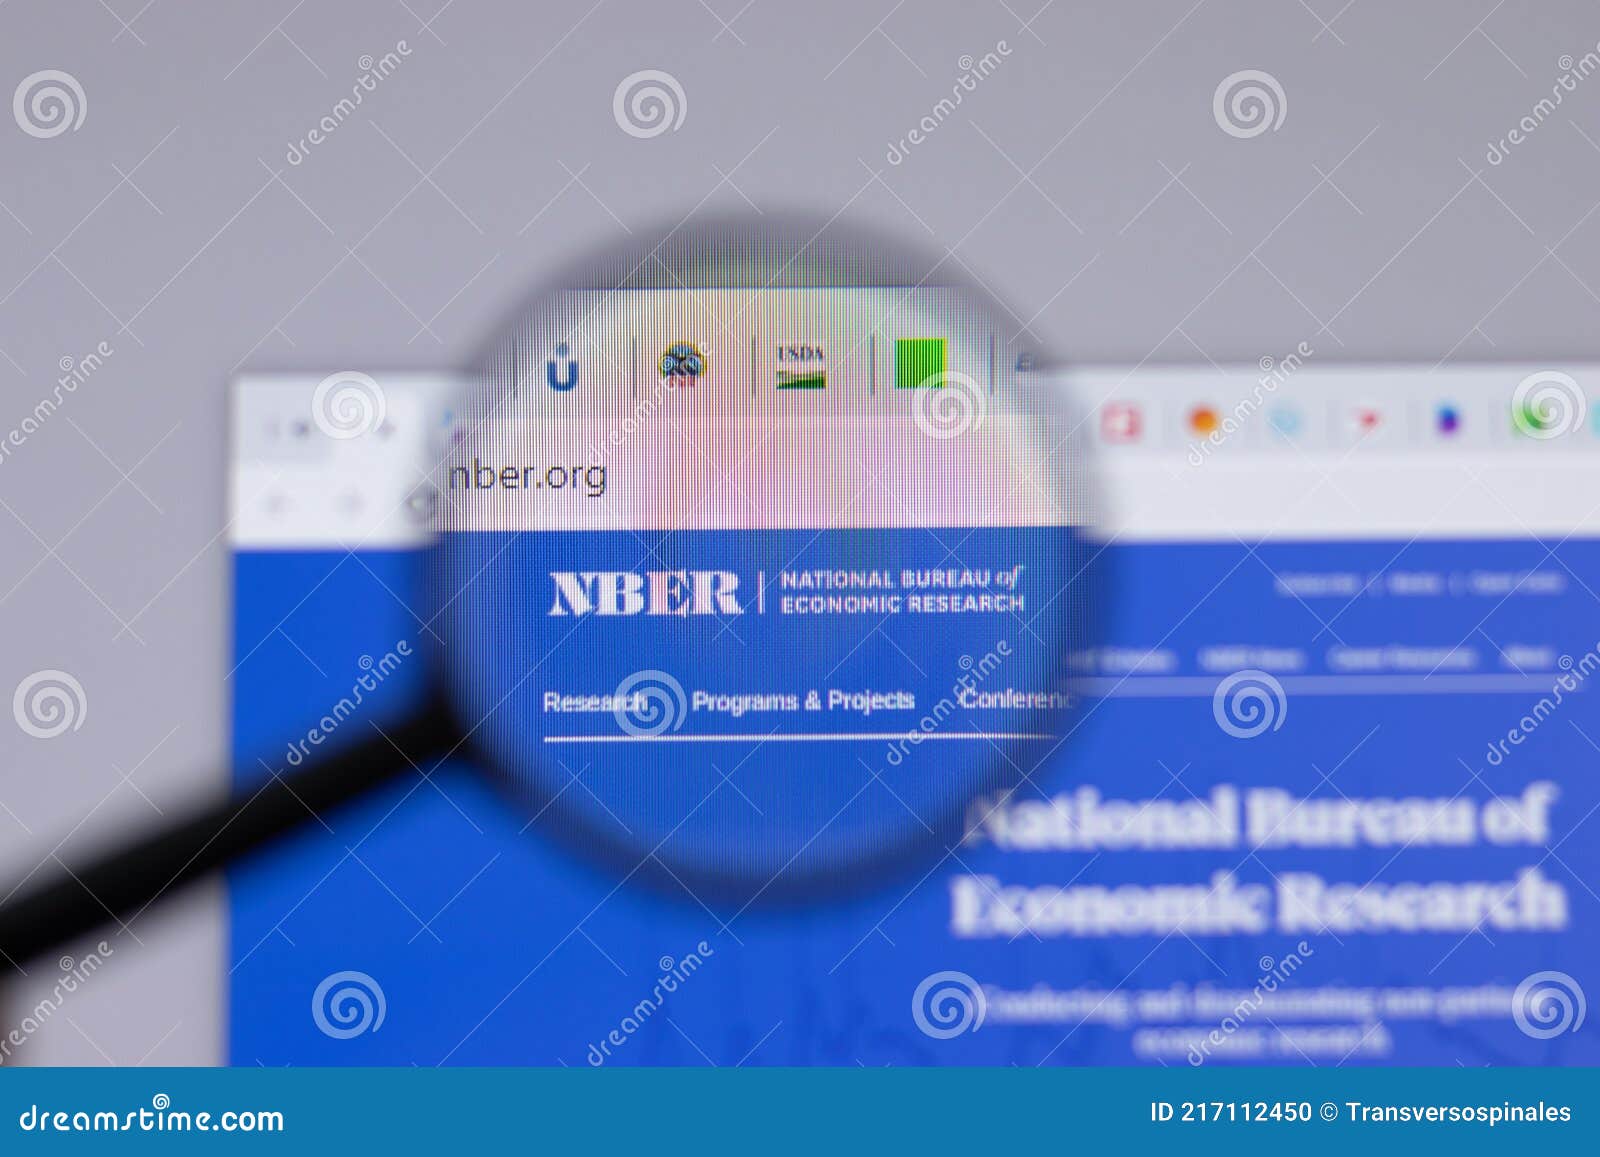 national bureau of economic research